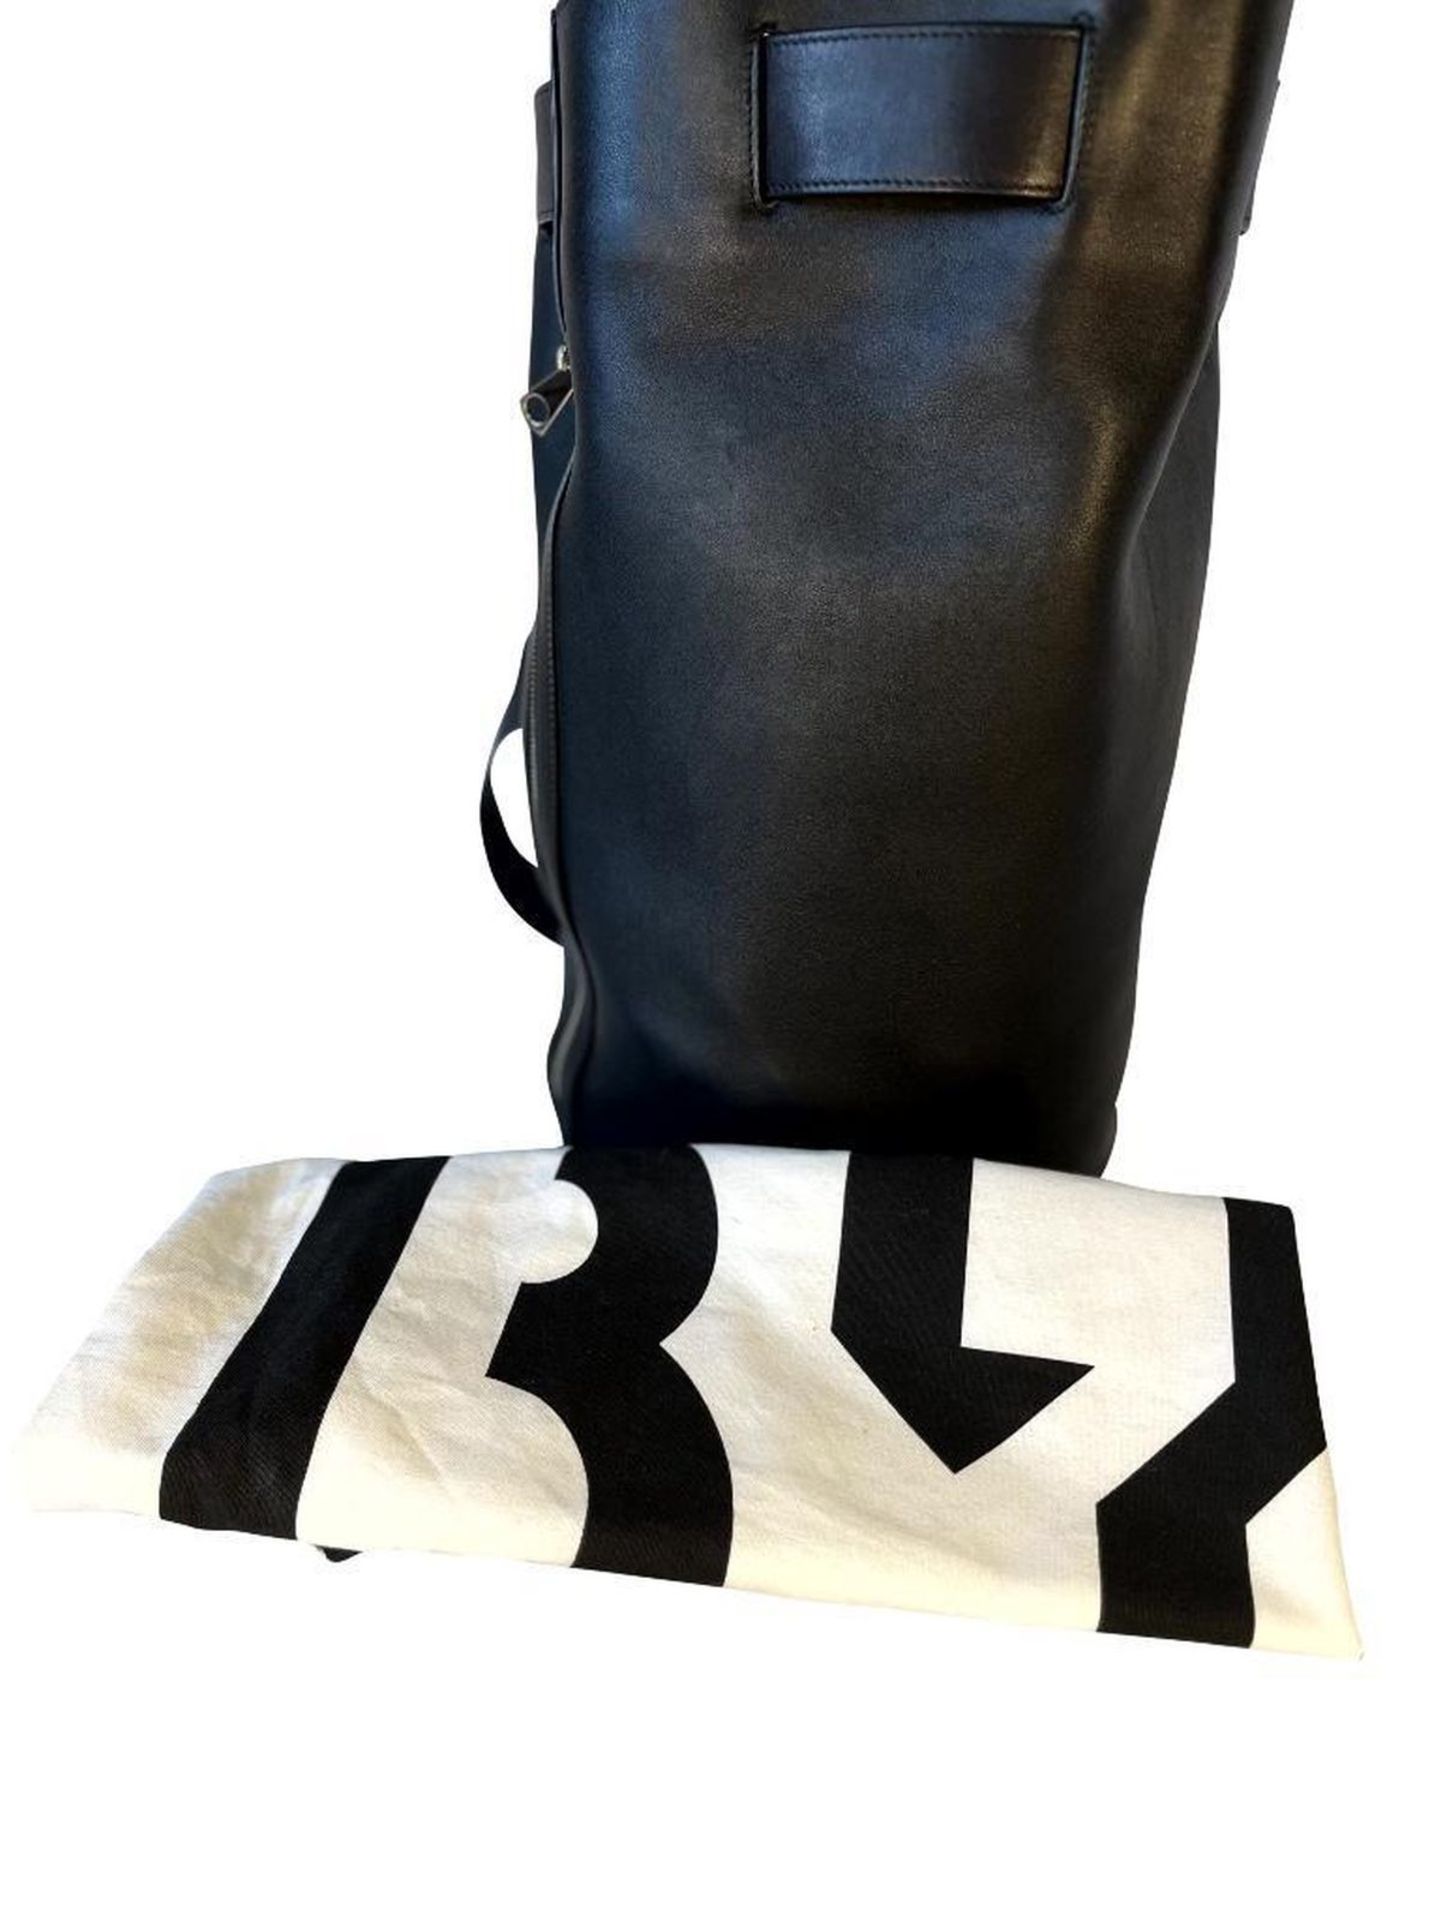 Byredo Leather Bag - Image 4 of 5